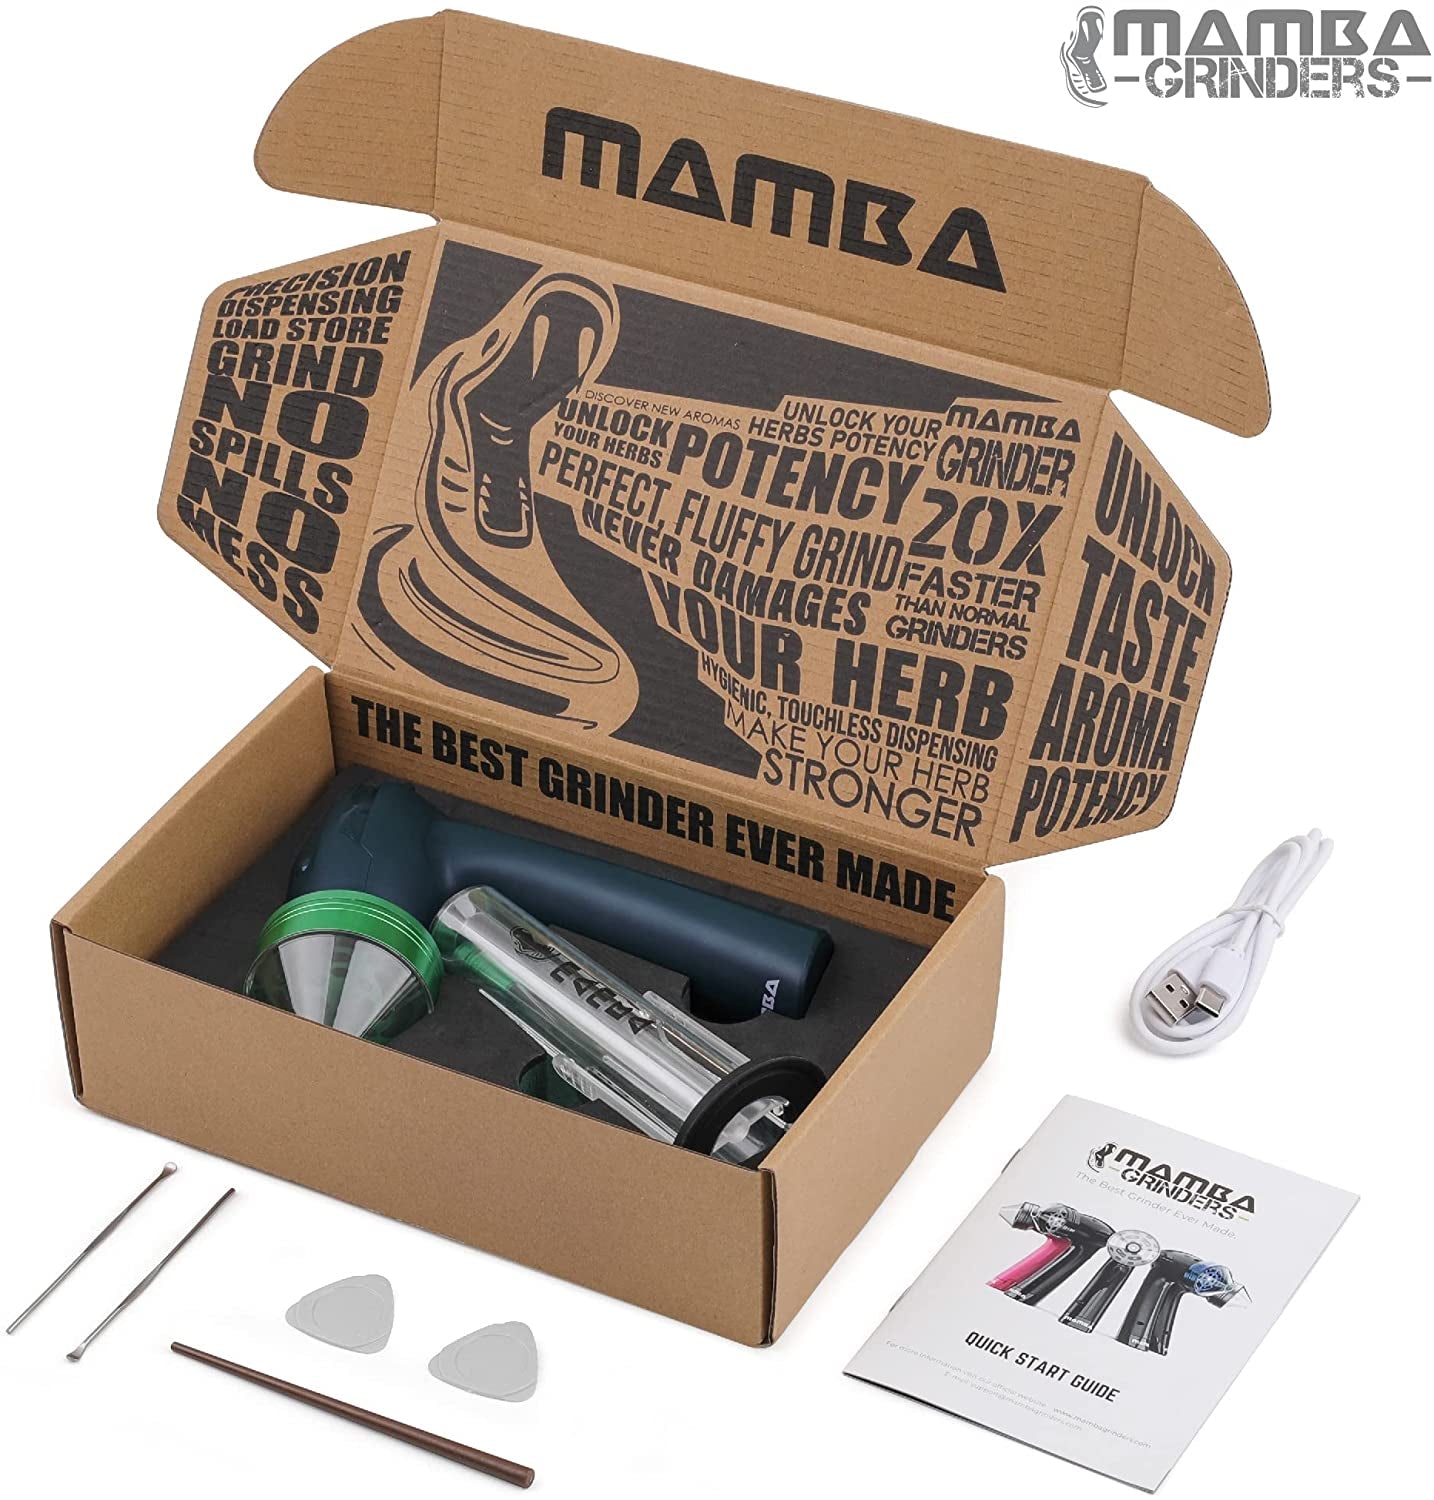 Mamba V2-55 Electric Herb Grinder – Mamba Grinders™